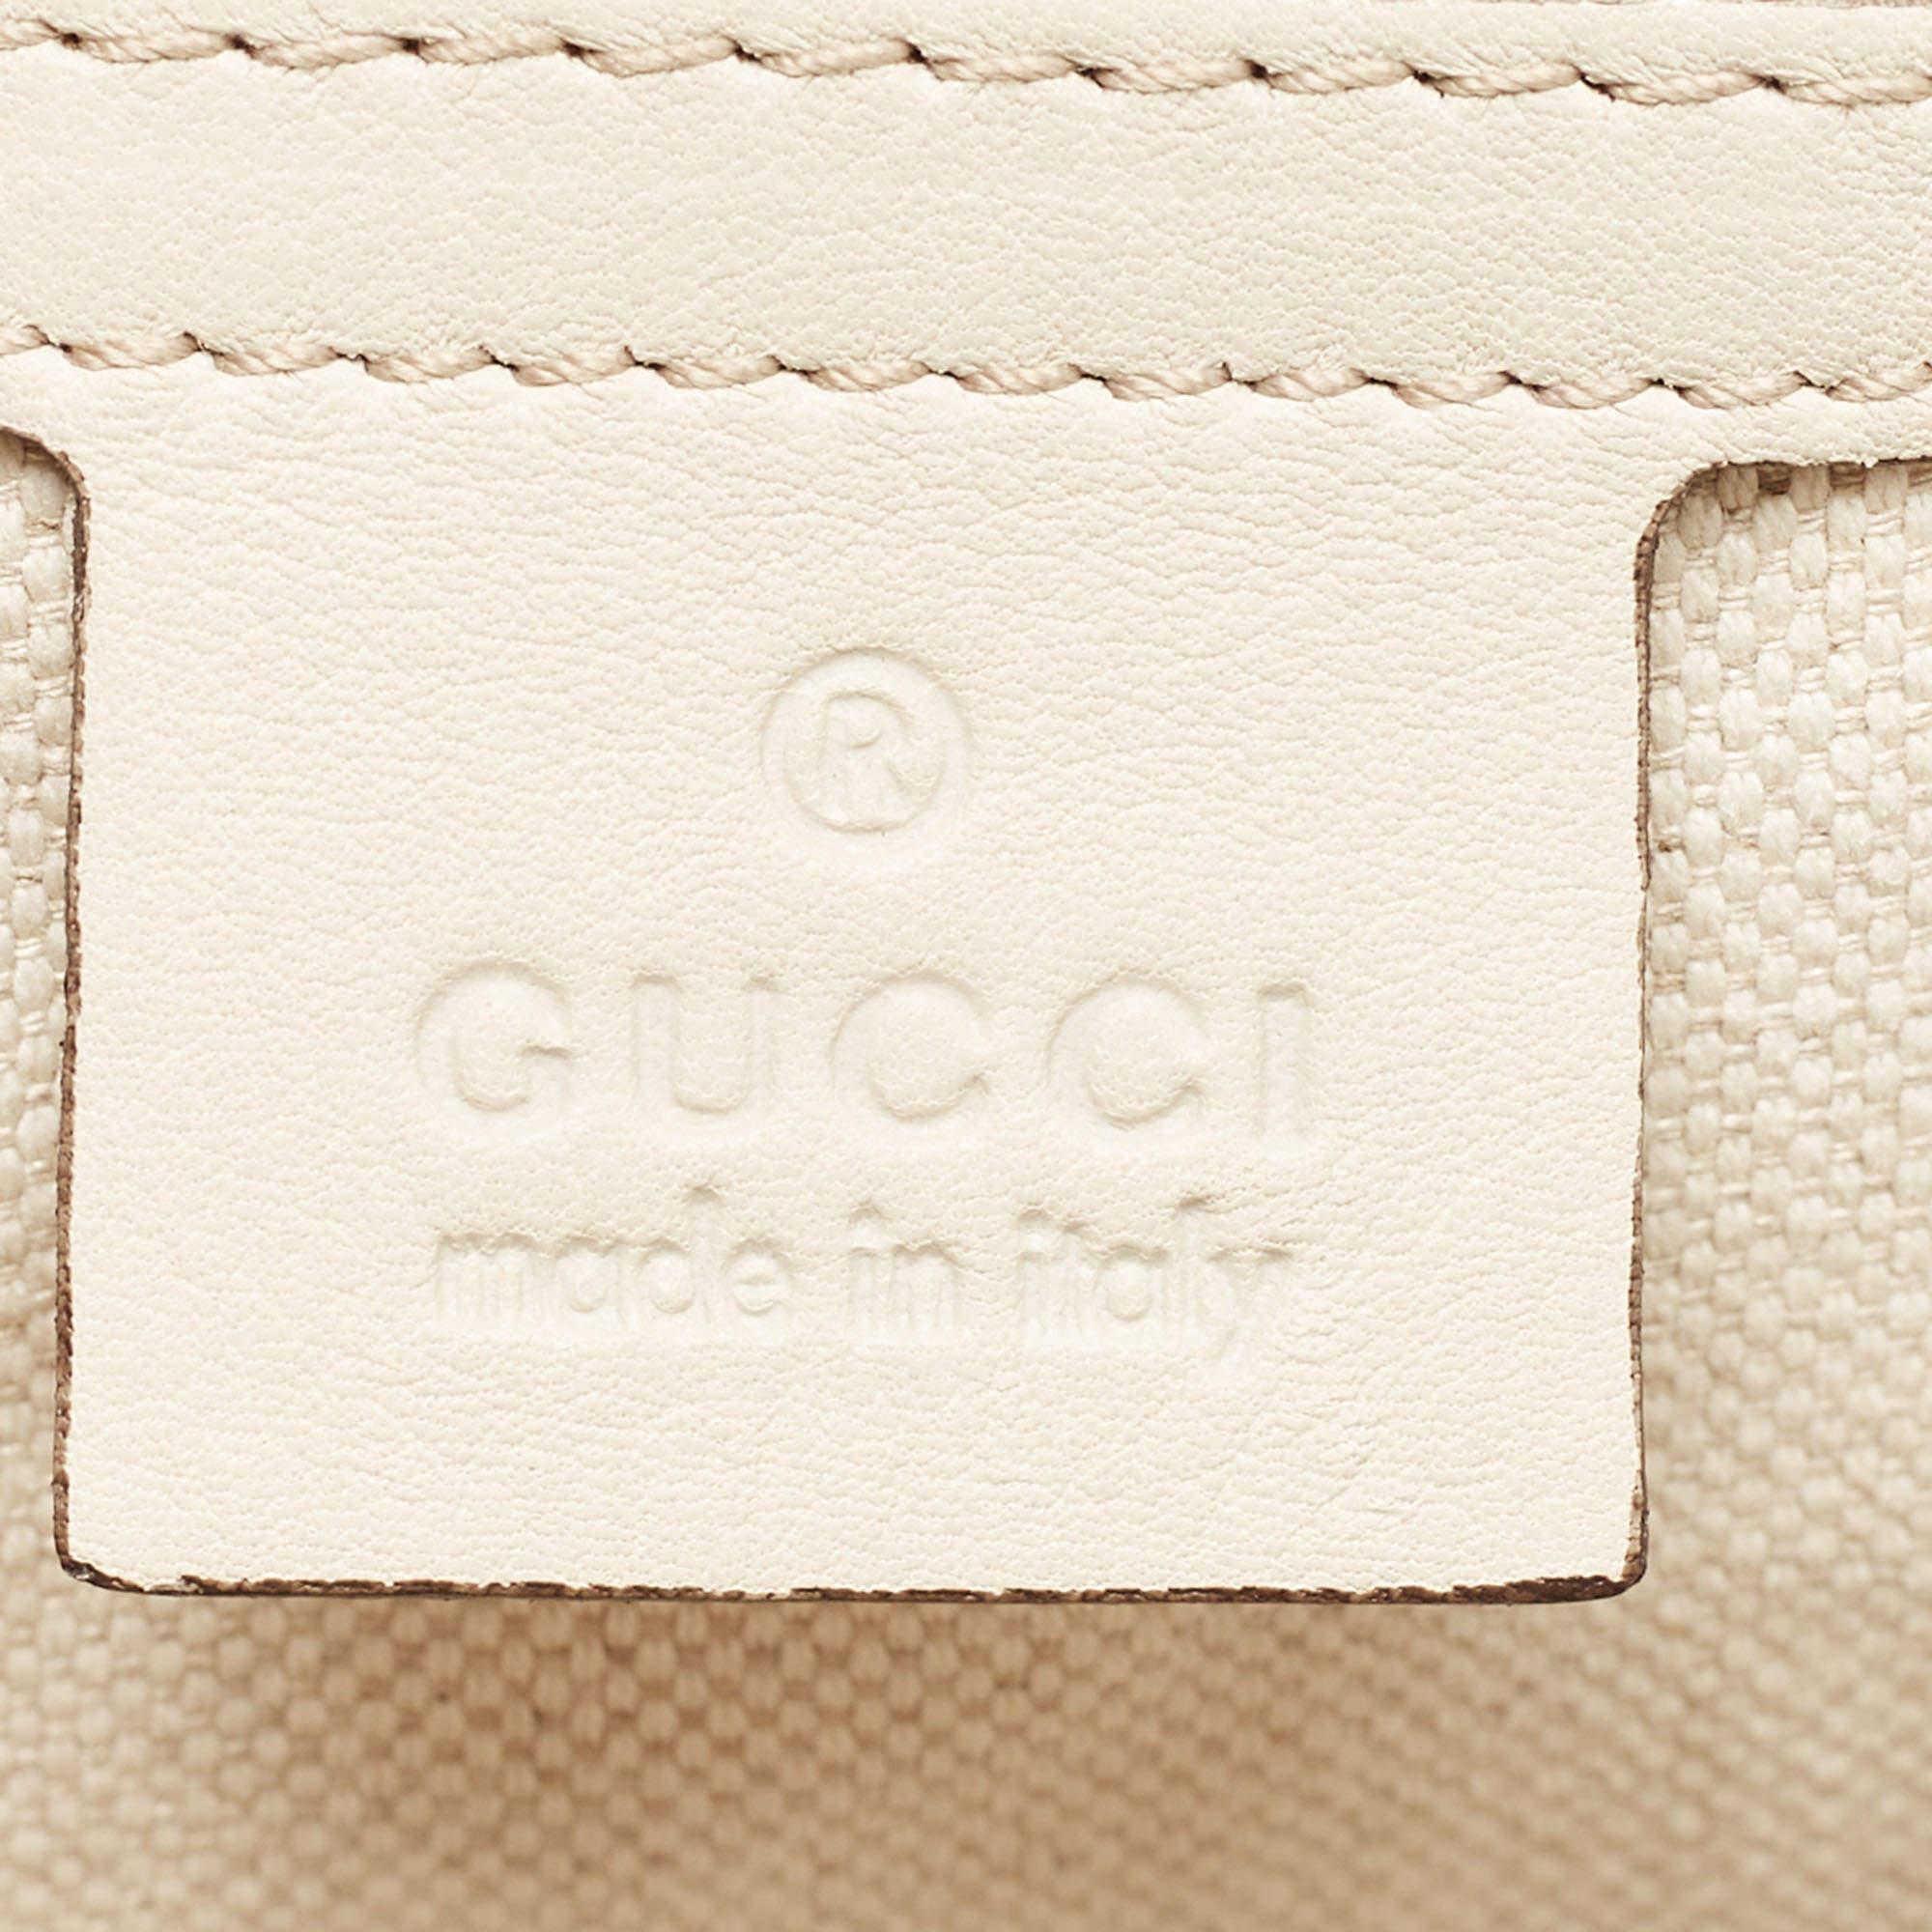 Gucci Off White Guccisima Leather Mayfair Tote 8